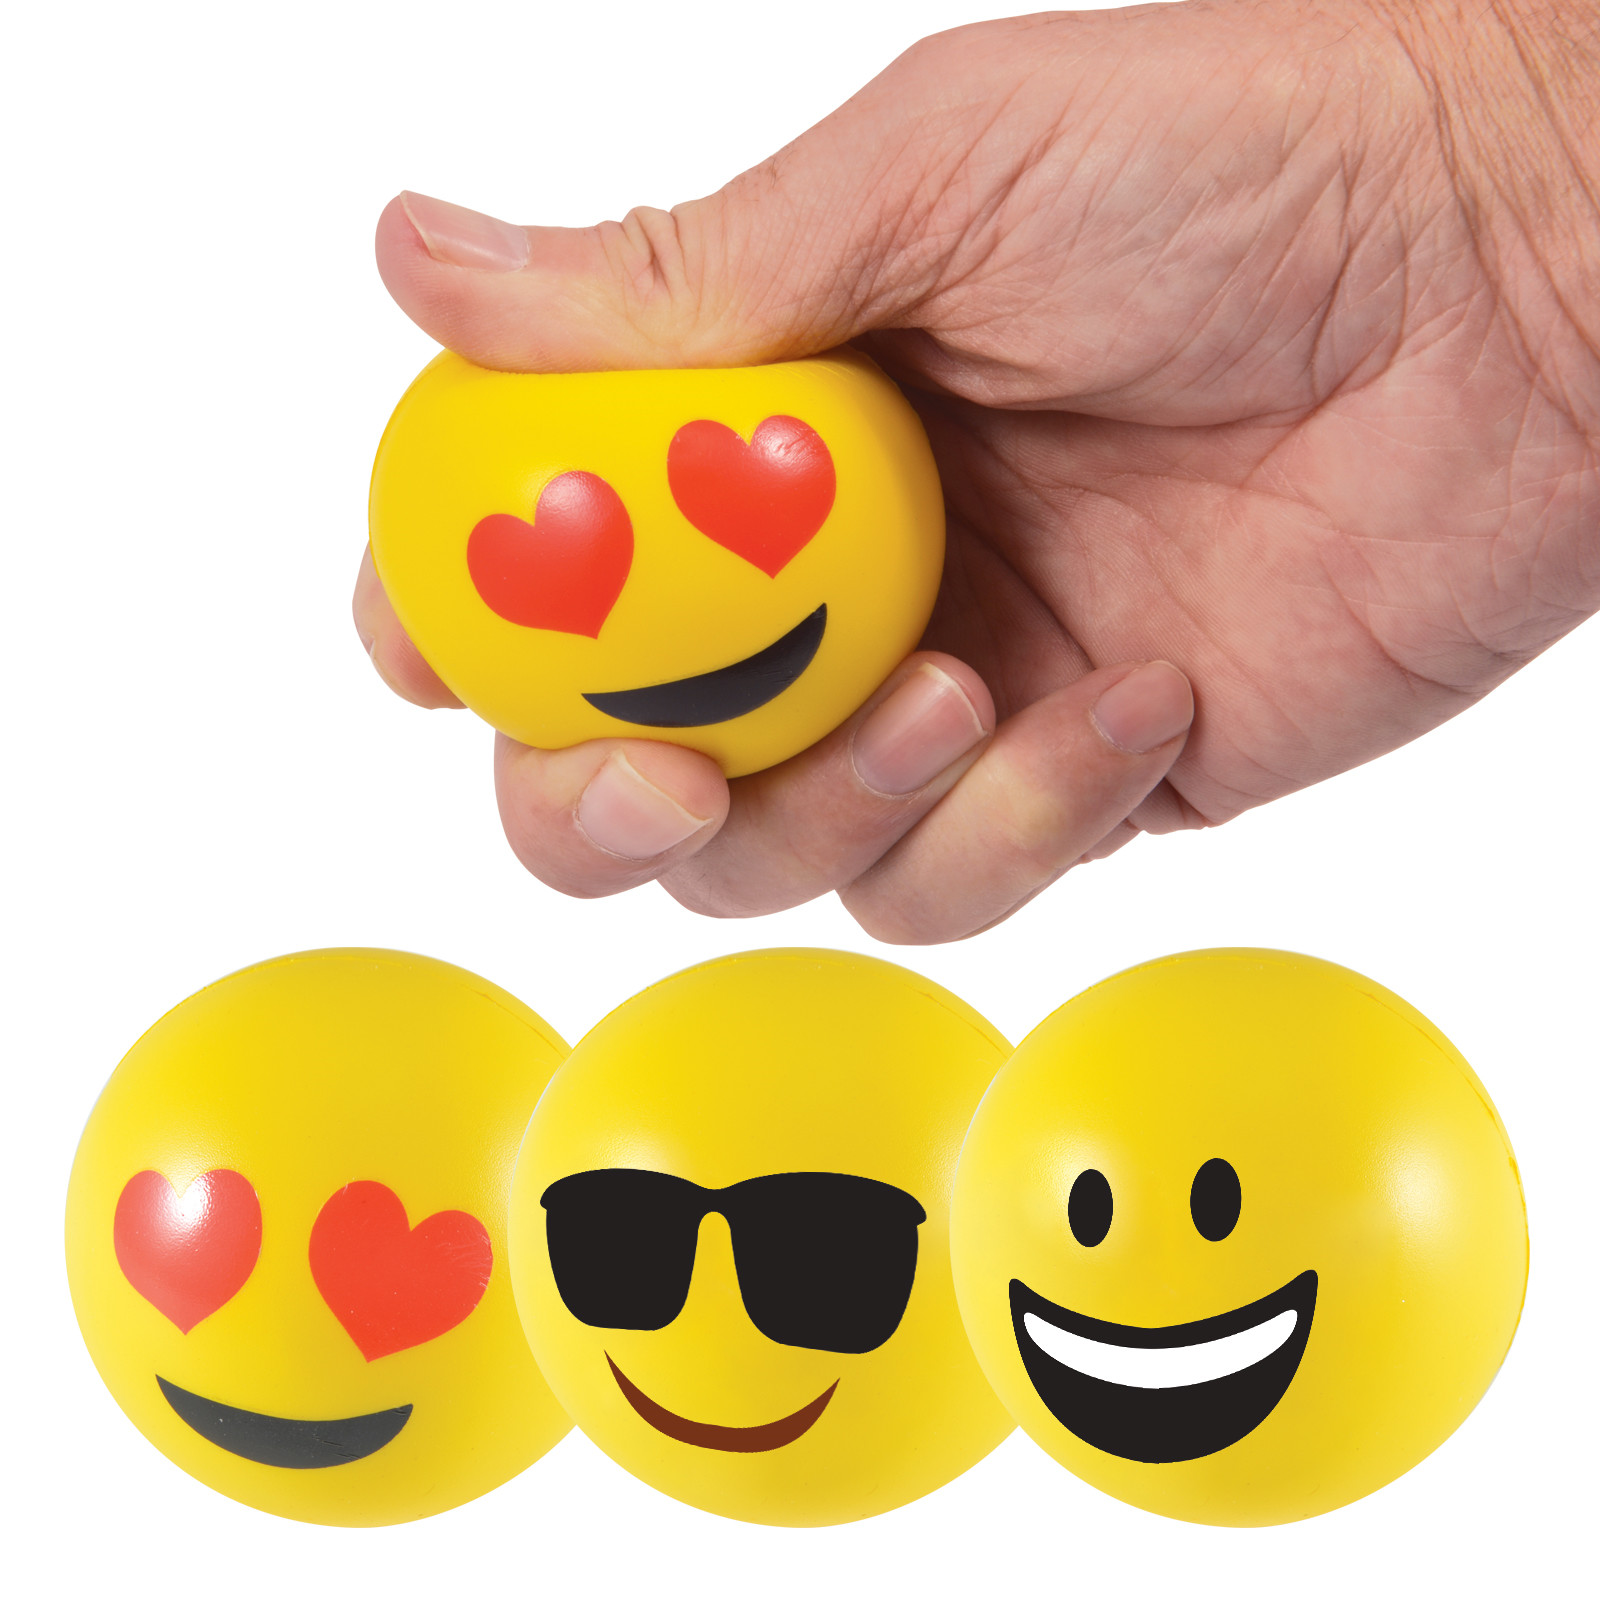 Emoji Stress Ball Reliever